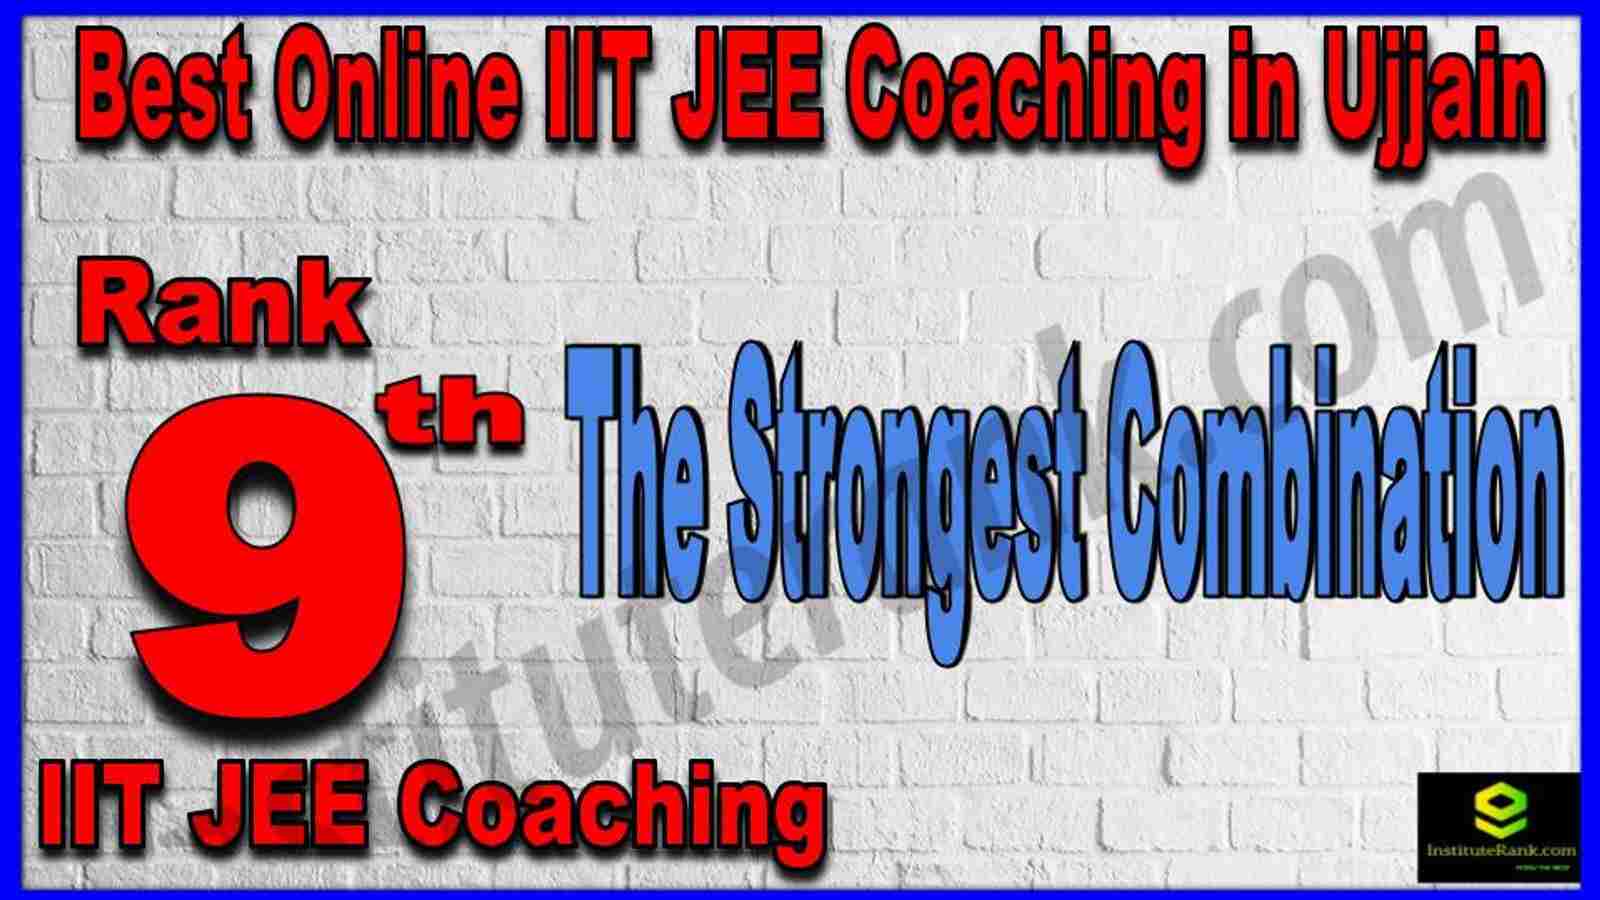 Rank 9th Best Online IIT-JEE Coaching in Ujjain